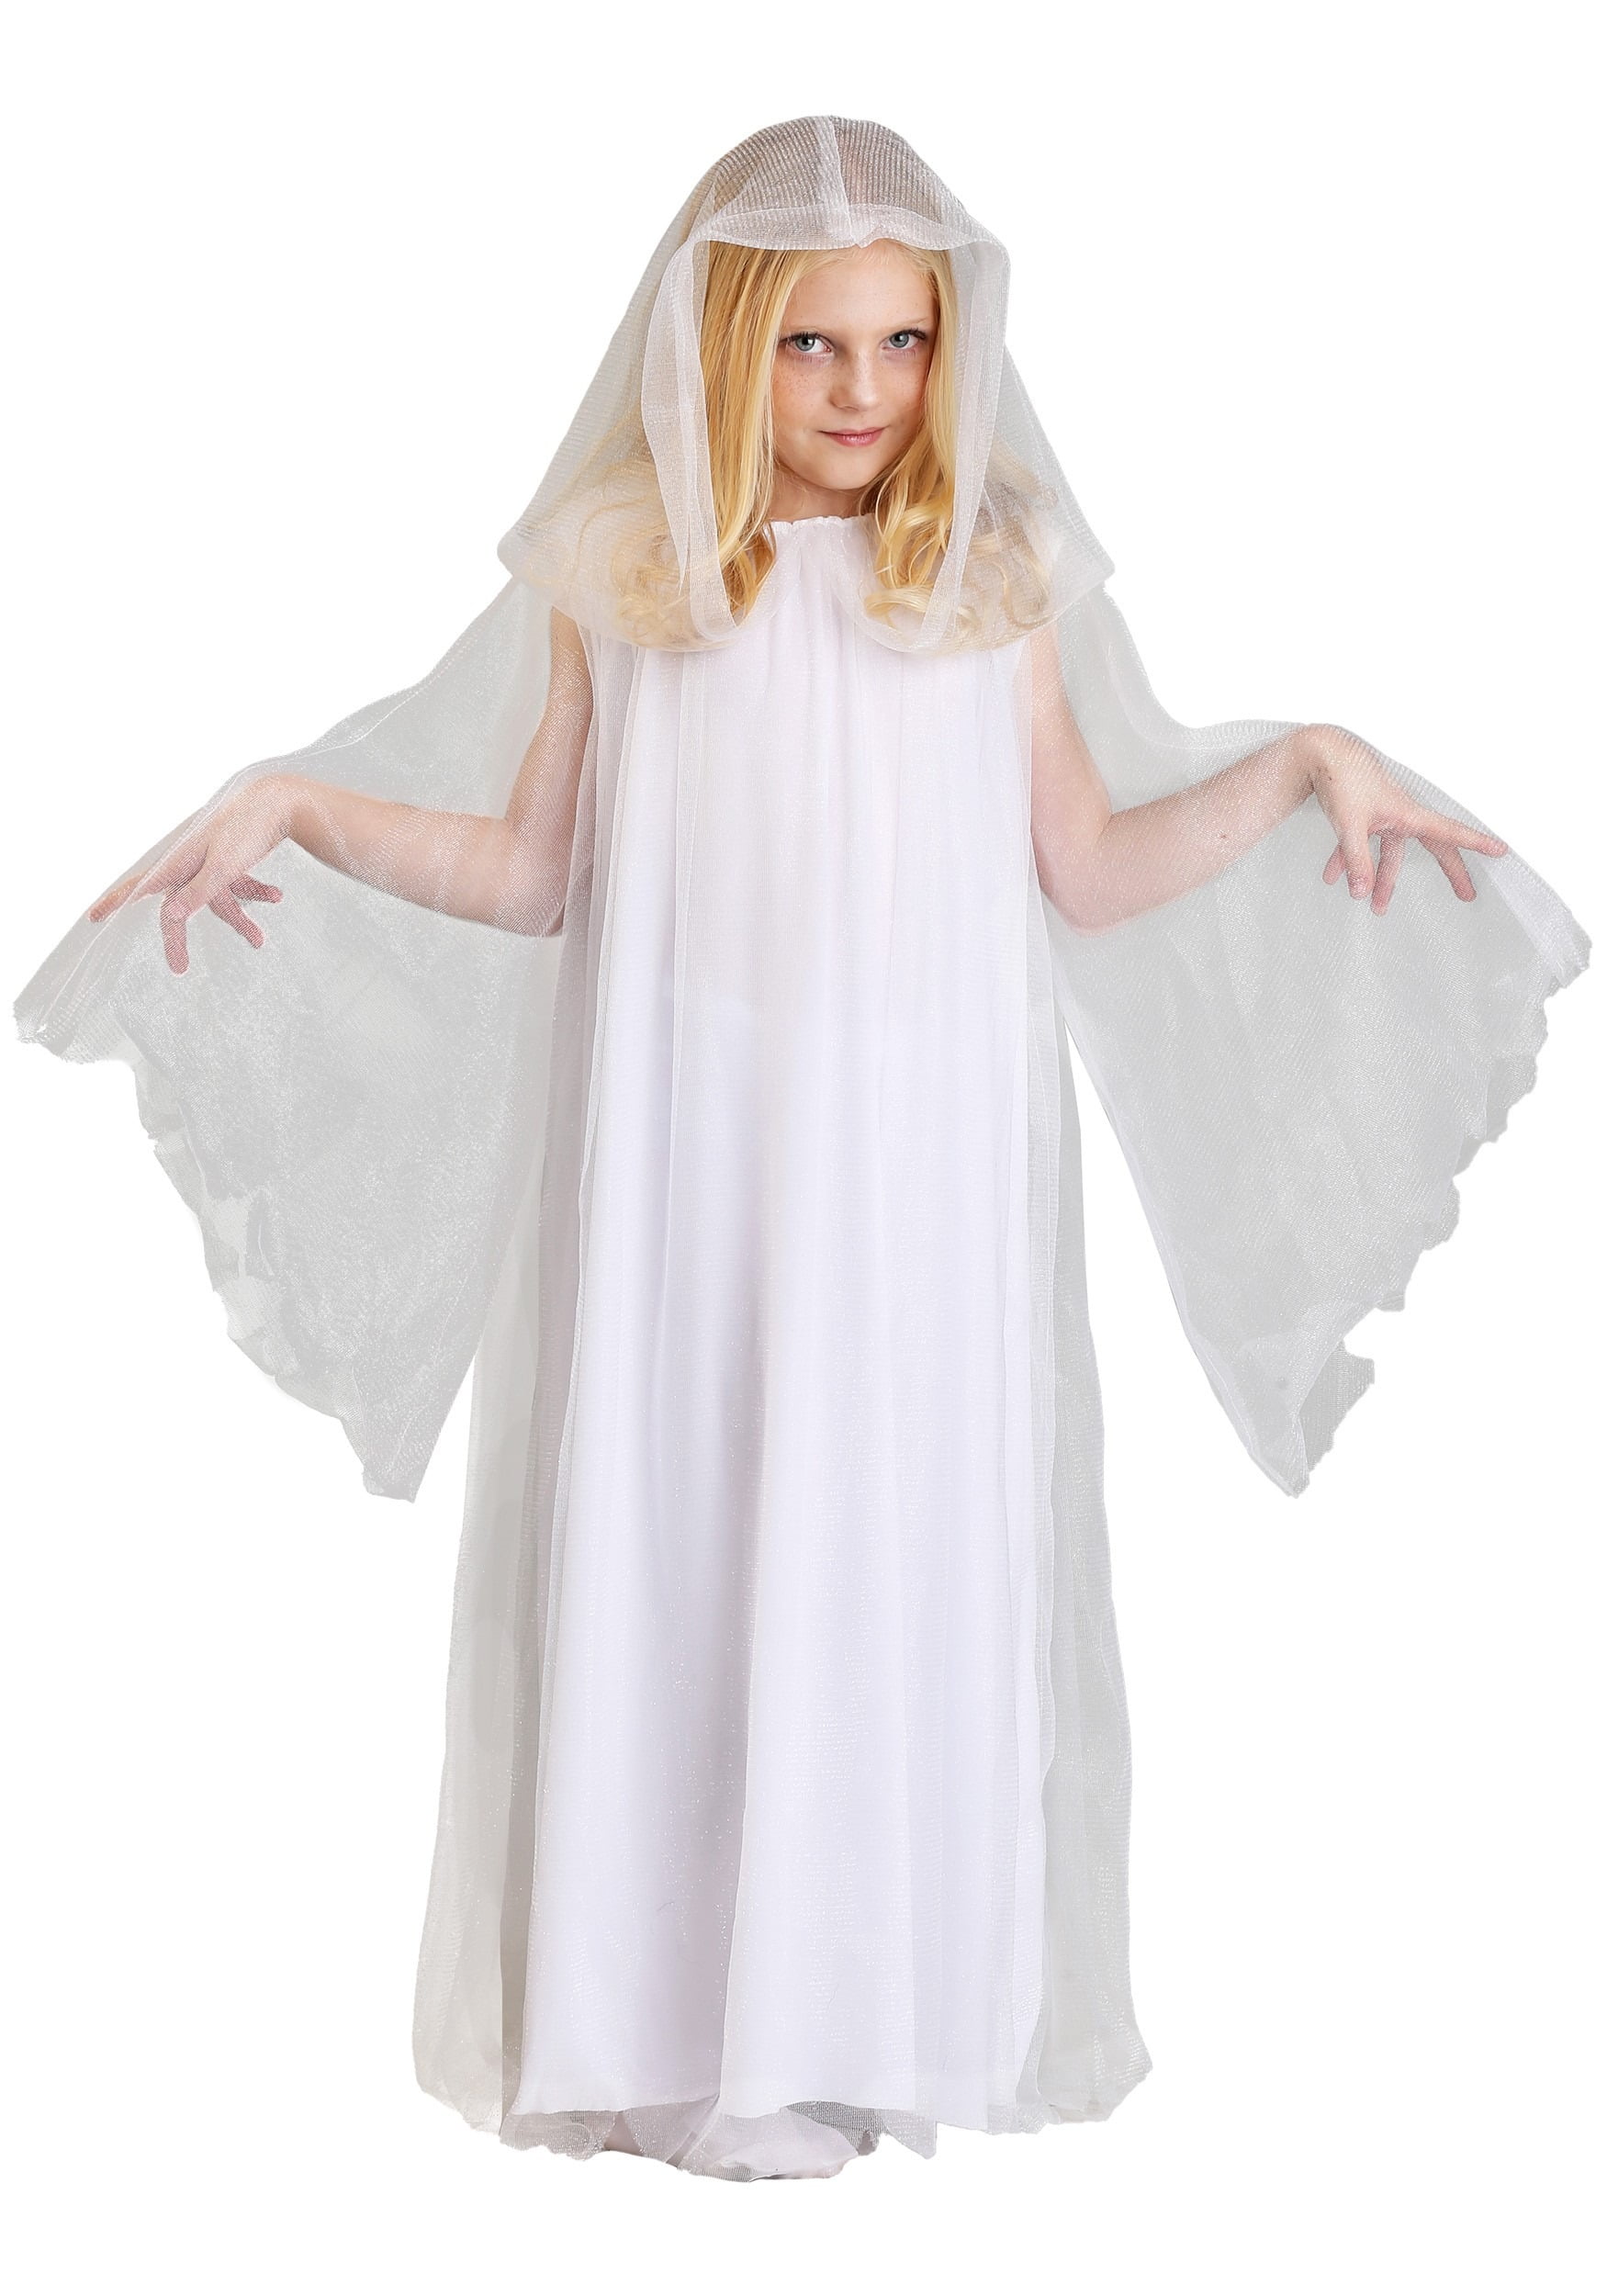 Haunting Ghost Costume for Girls - Walmart.com